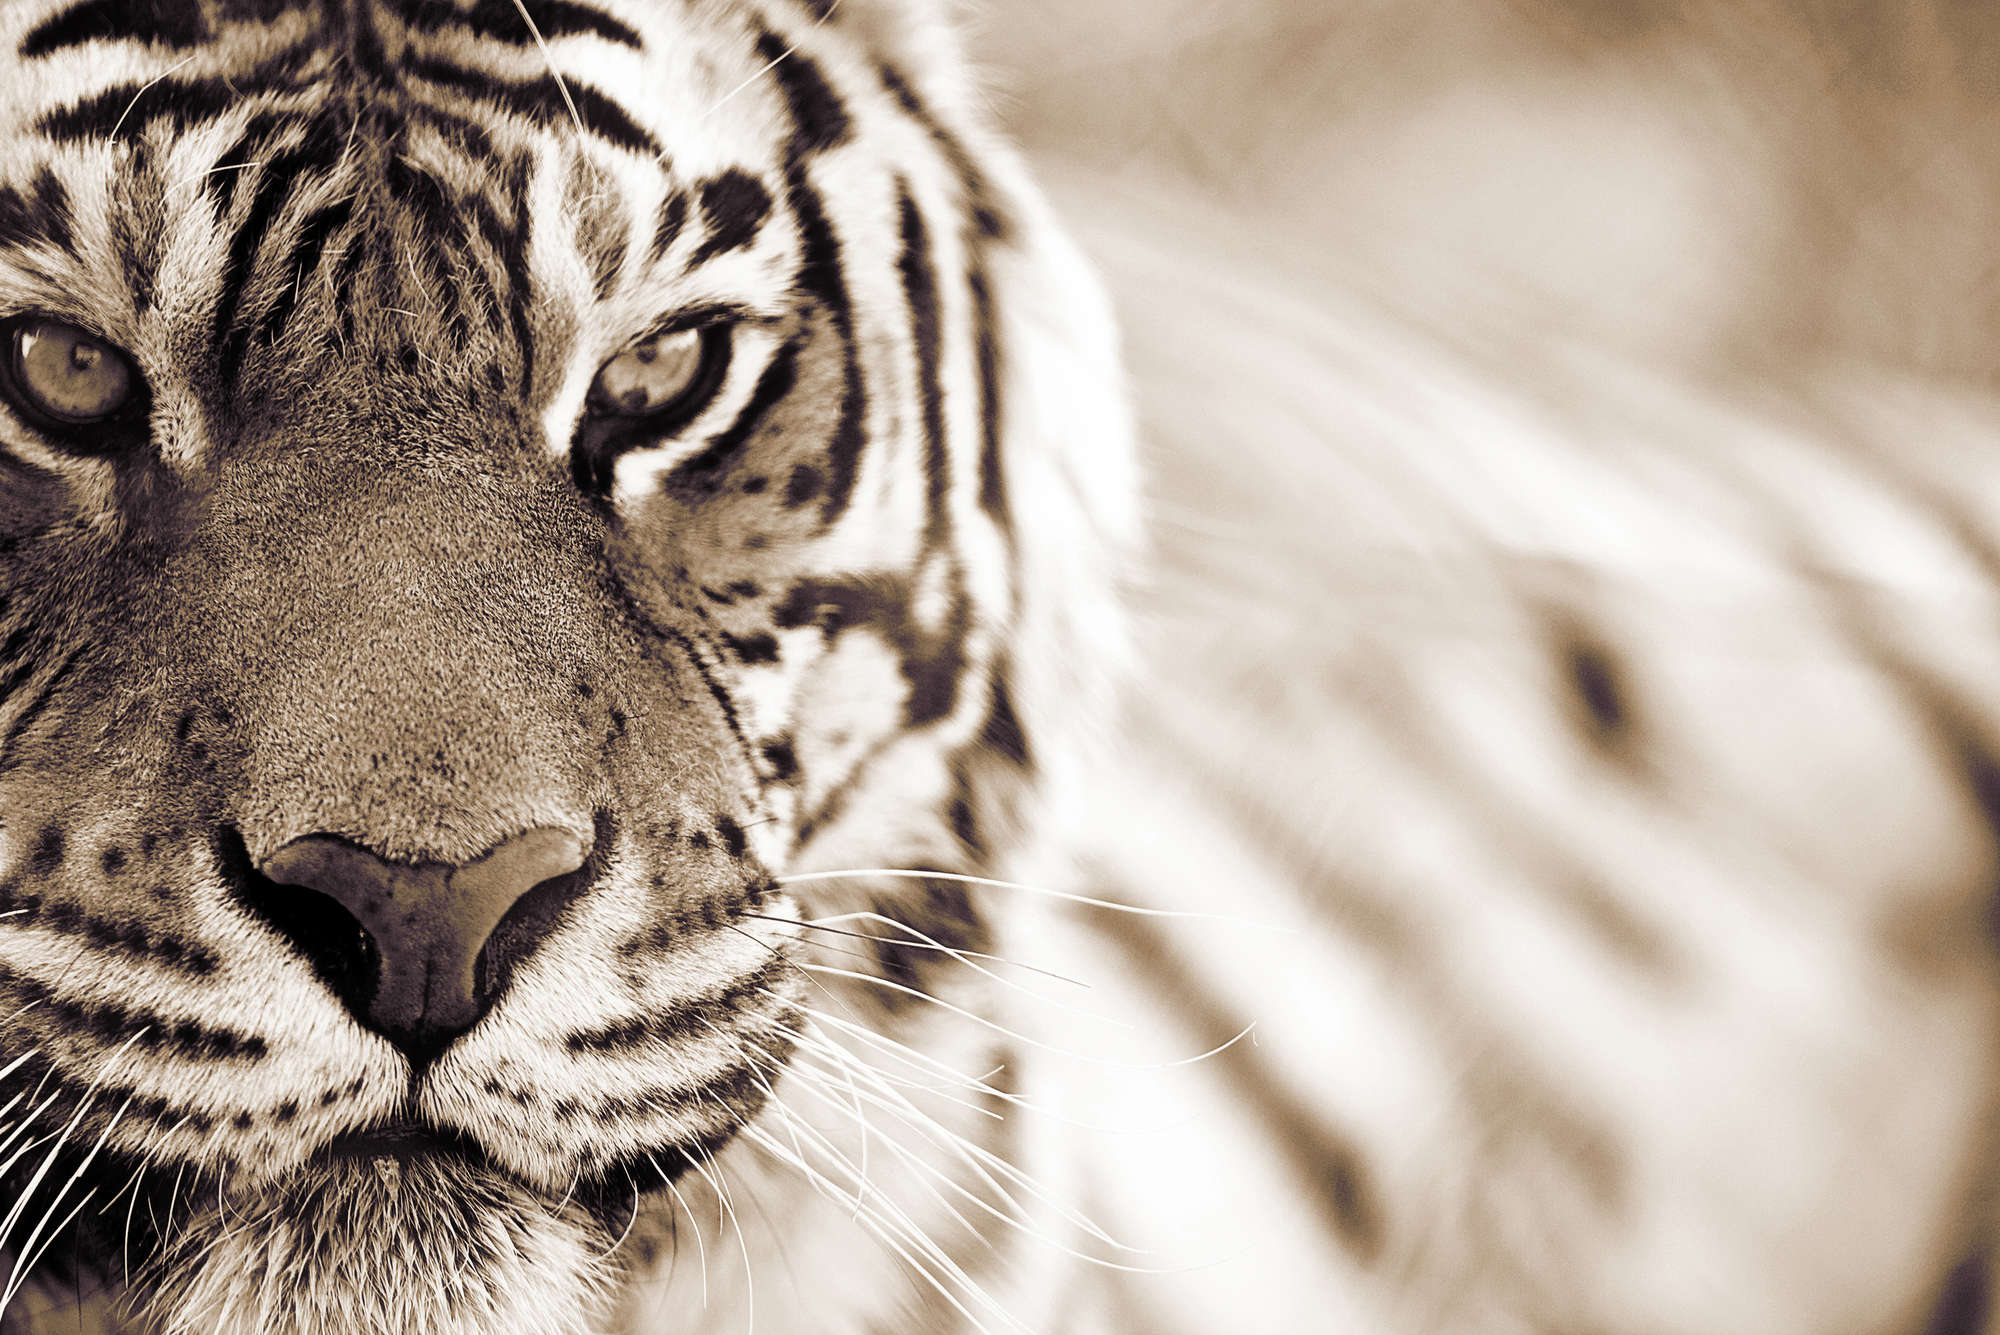             Dierenbehang Close-up van tijger - Mat glad vlies
        